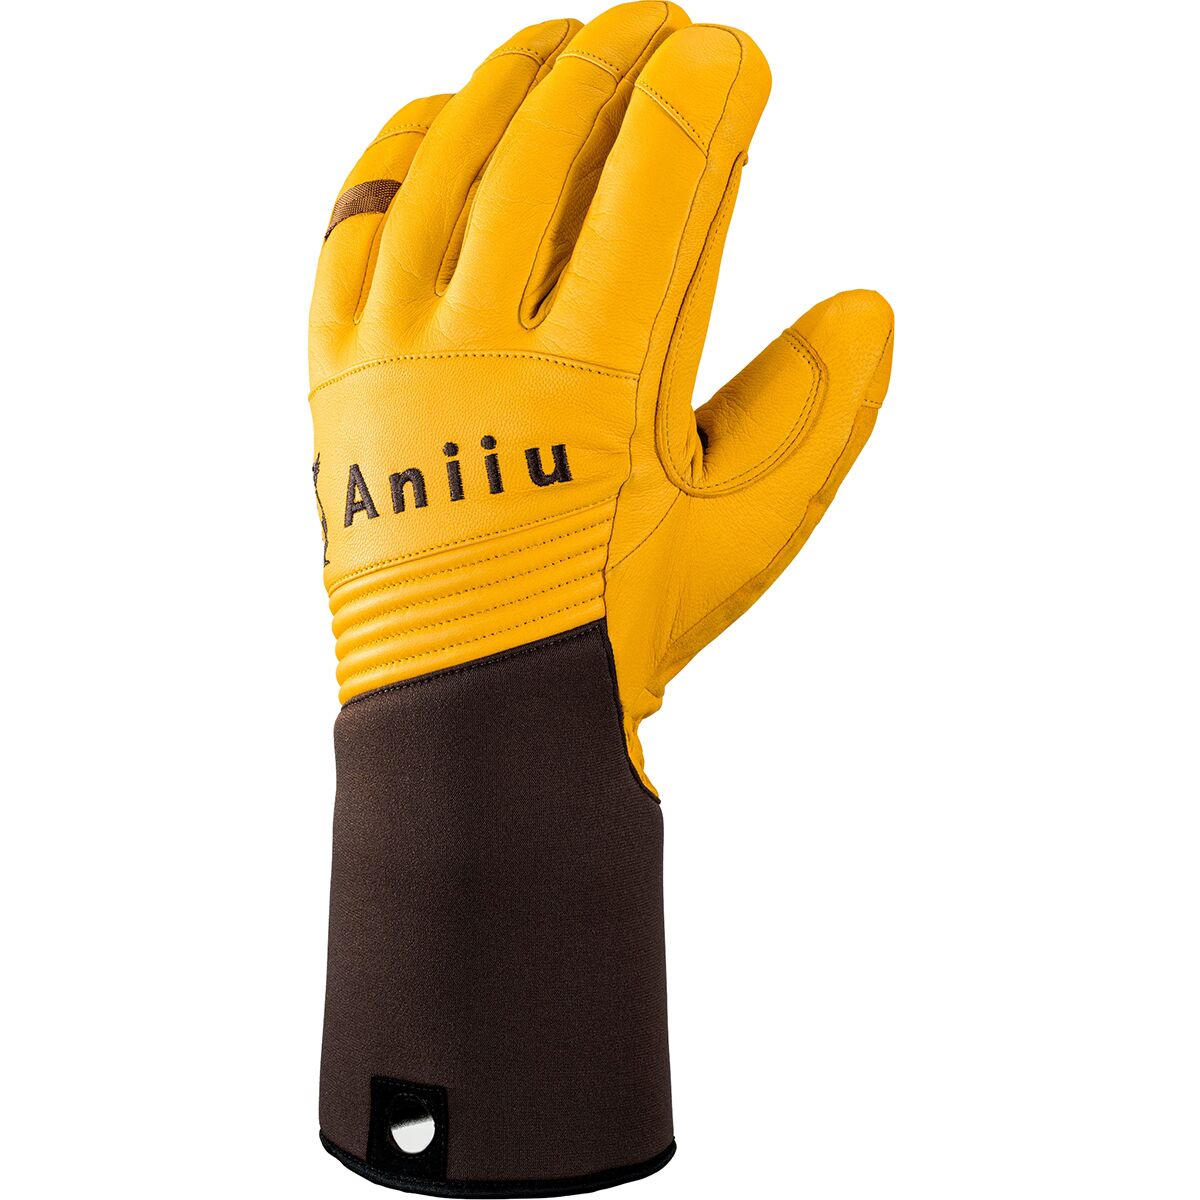 Aniiu Tyree Neo Cuff Glove - Men's